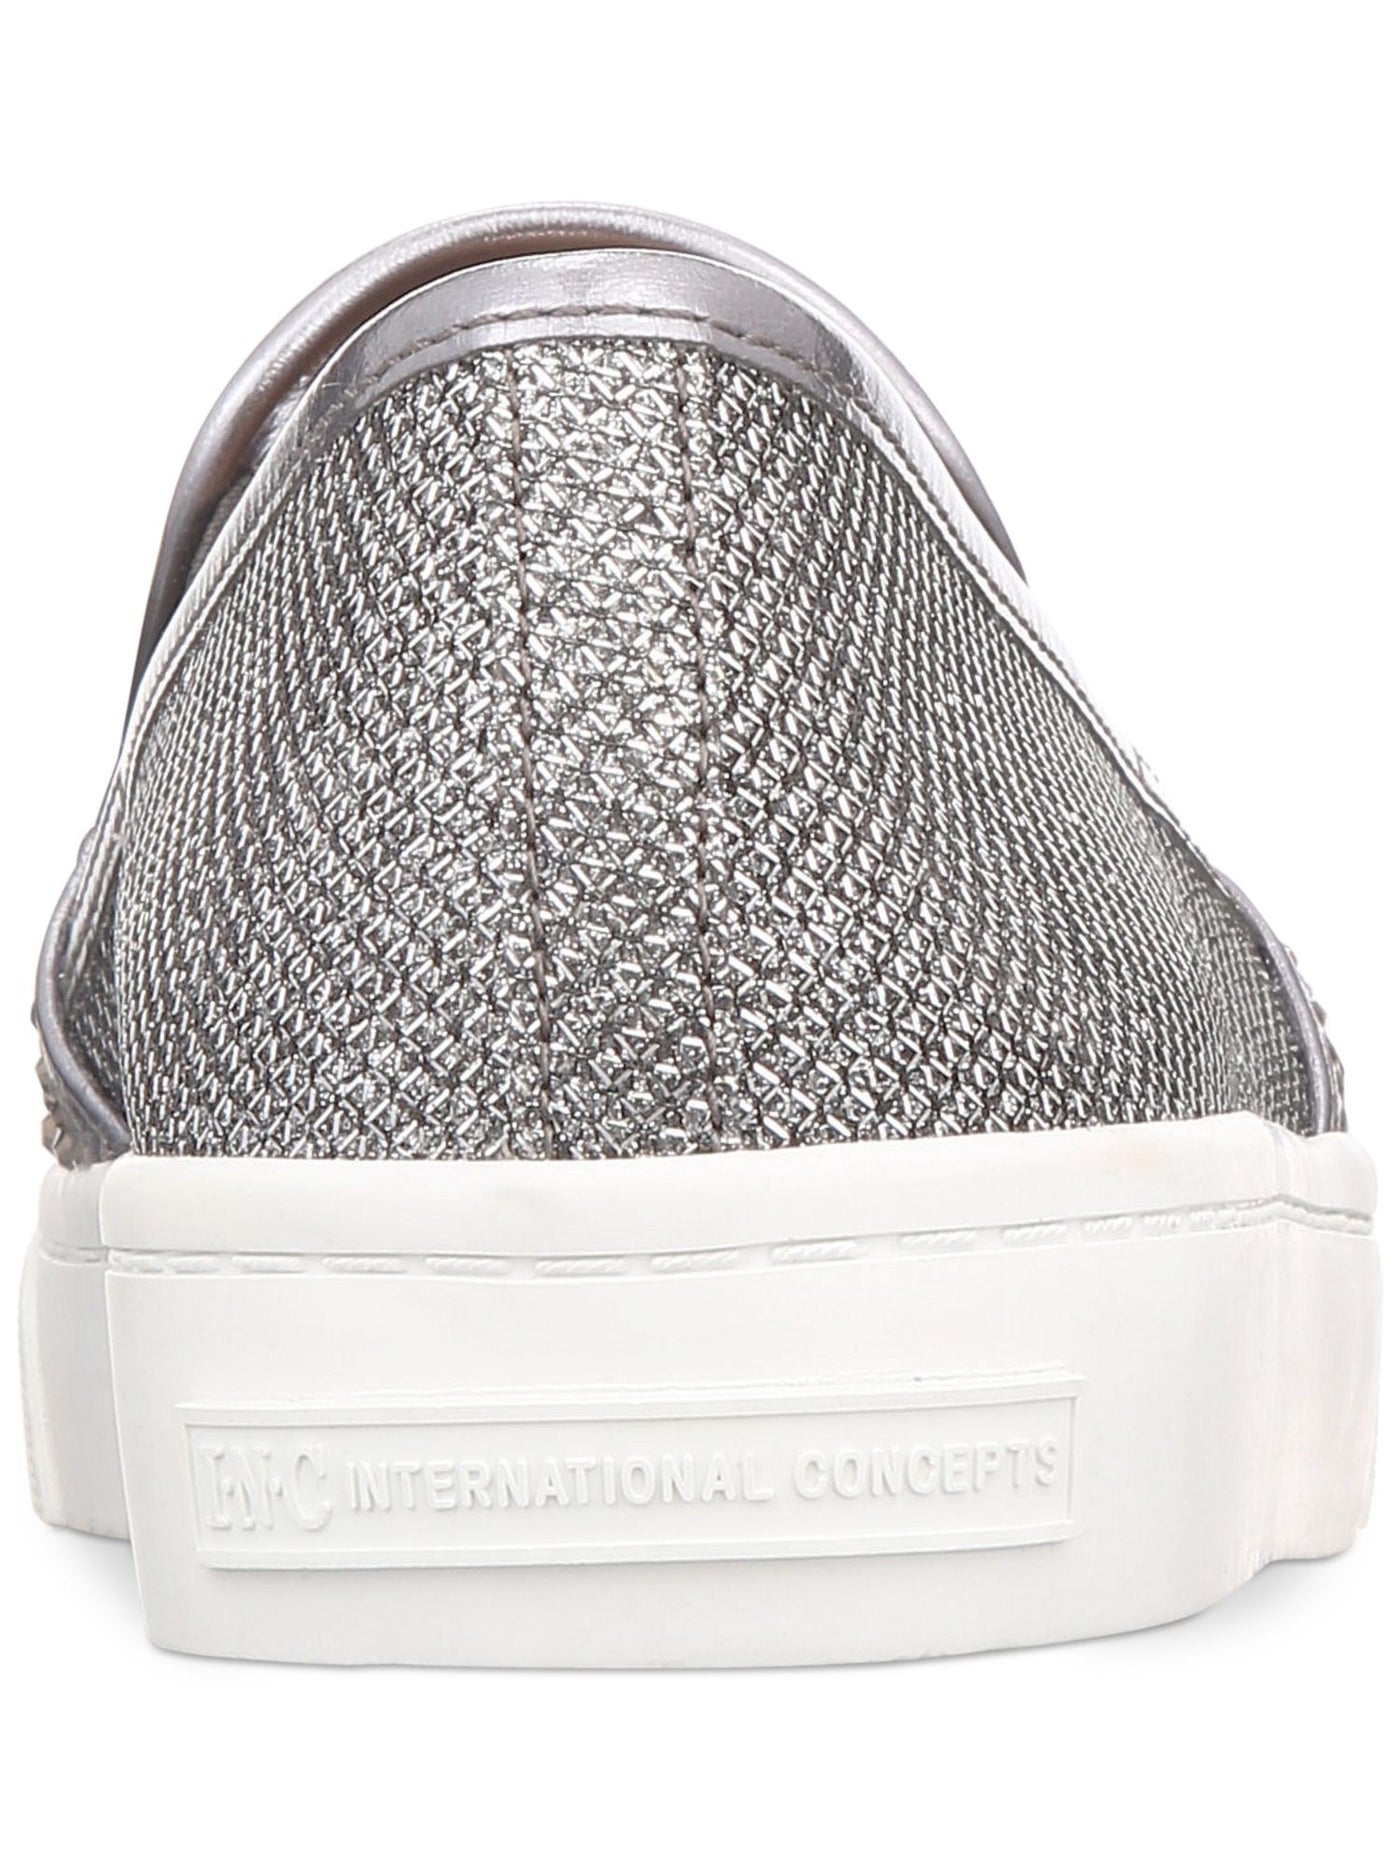 INC Womens Silver Cushioned Rhinestone Goring Sammee Round Toe Platform Slip On Sneakers Shoes 6 M